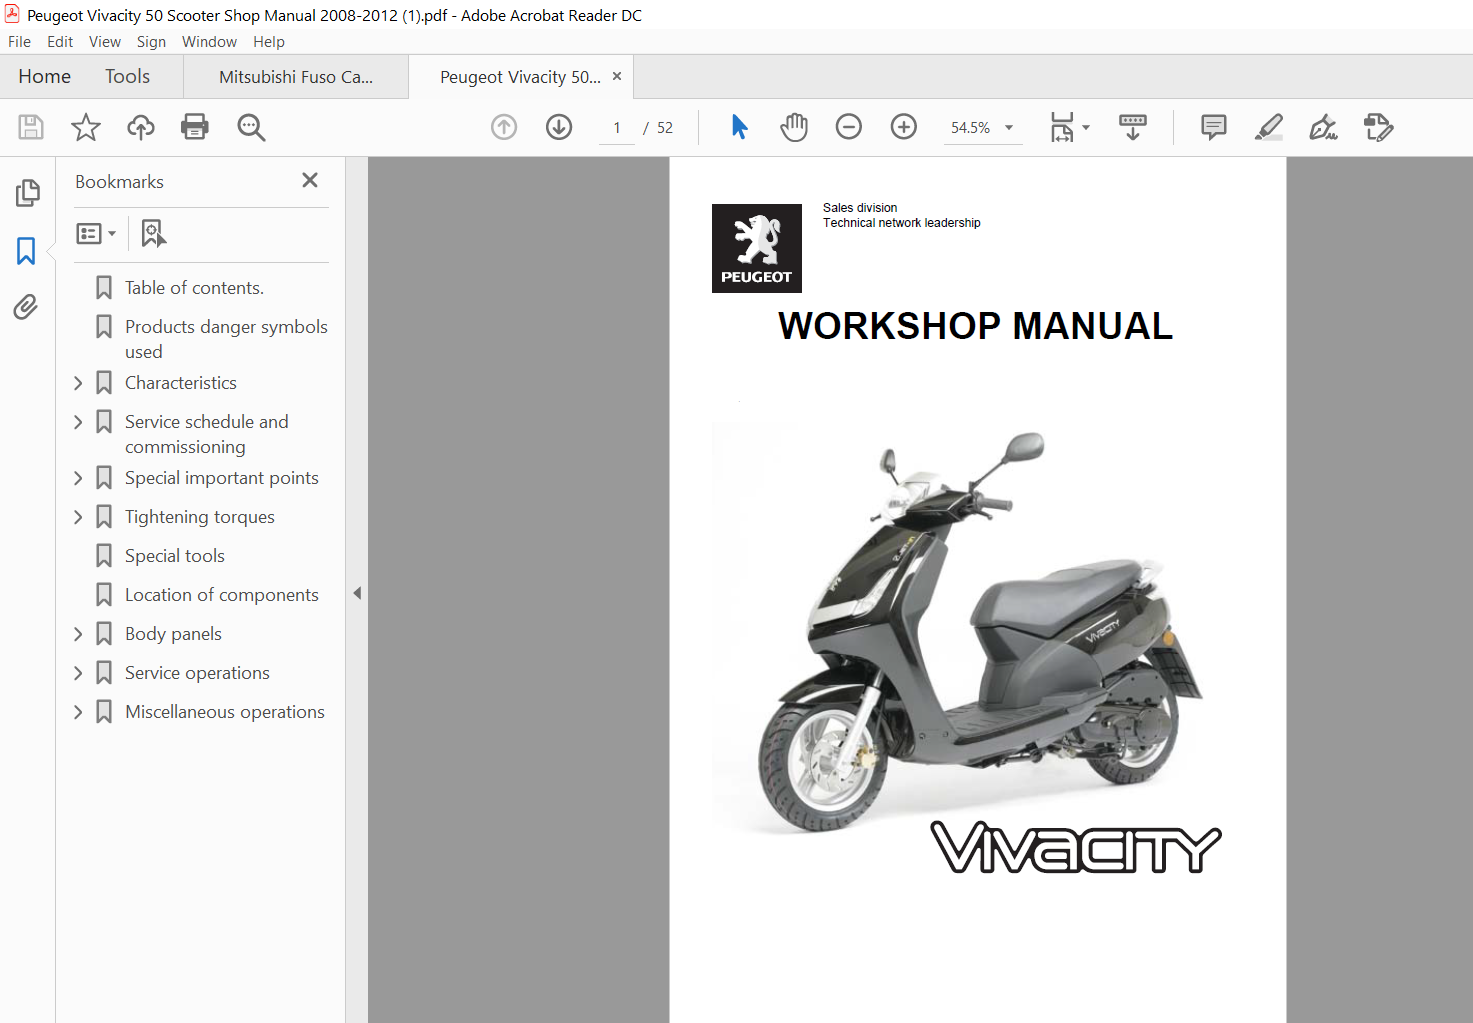 2008-2012 Peugeot Vivacity 50 Scooter Shop Manual Download - HeyDownloads - Manual Downloads